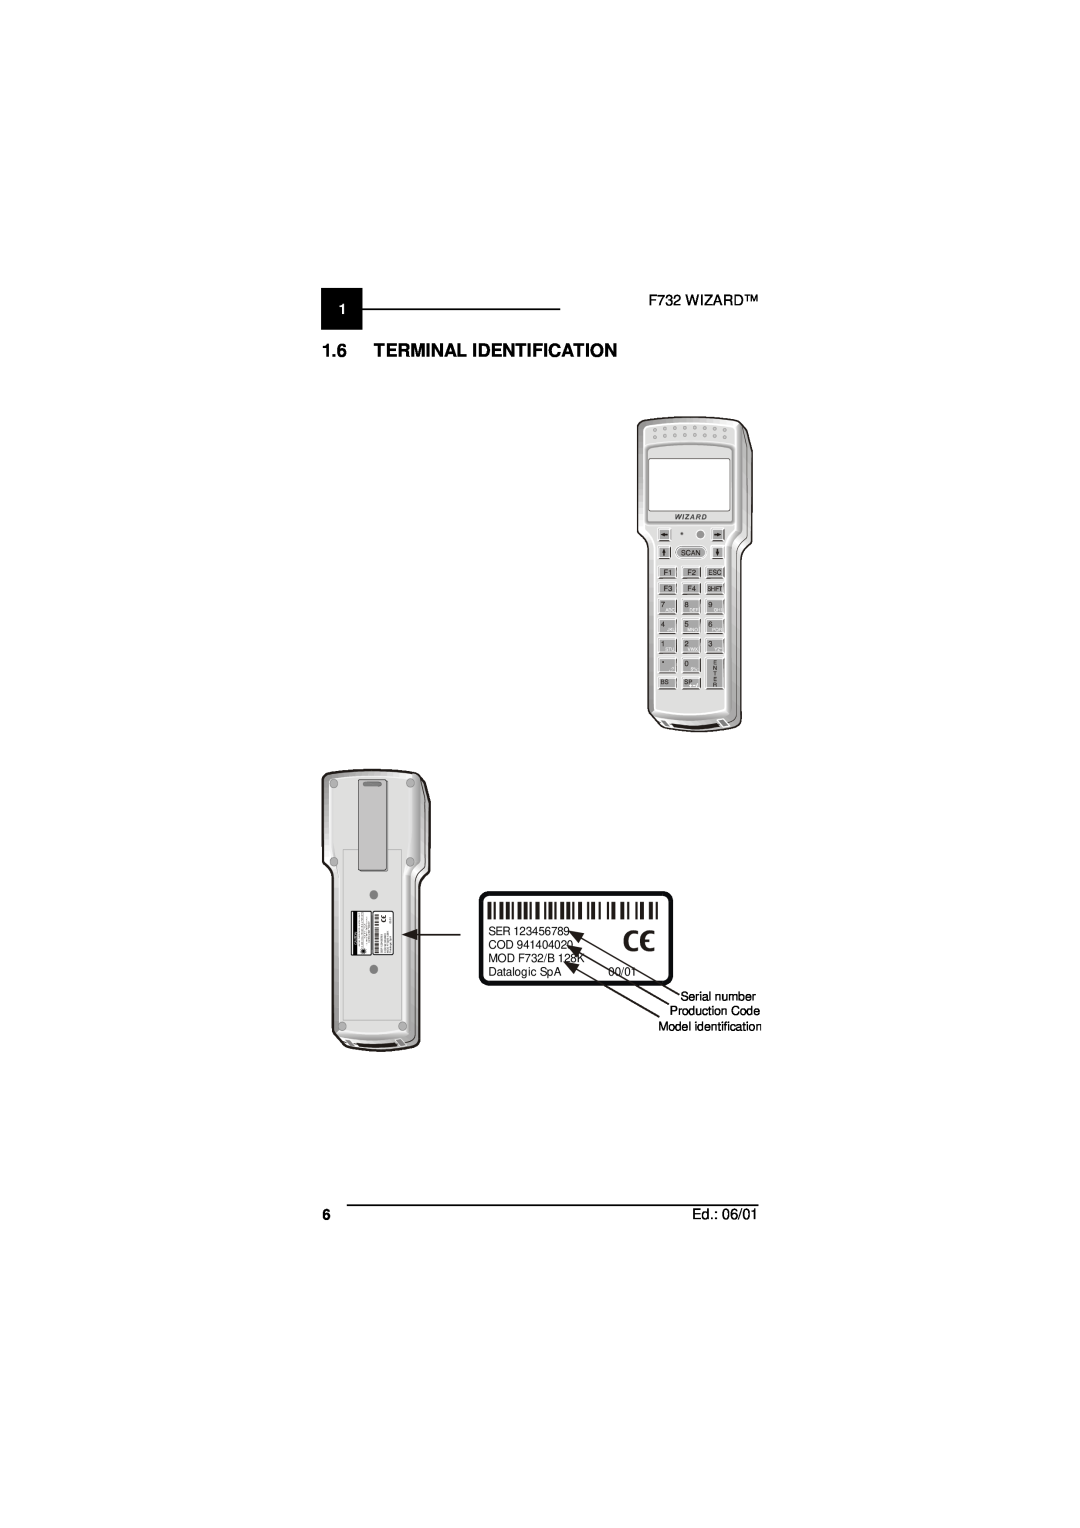 Datalogic Scanning user manual Terminal Identification, F732 WIZARD, Ed. 06/01, 00/01 